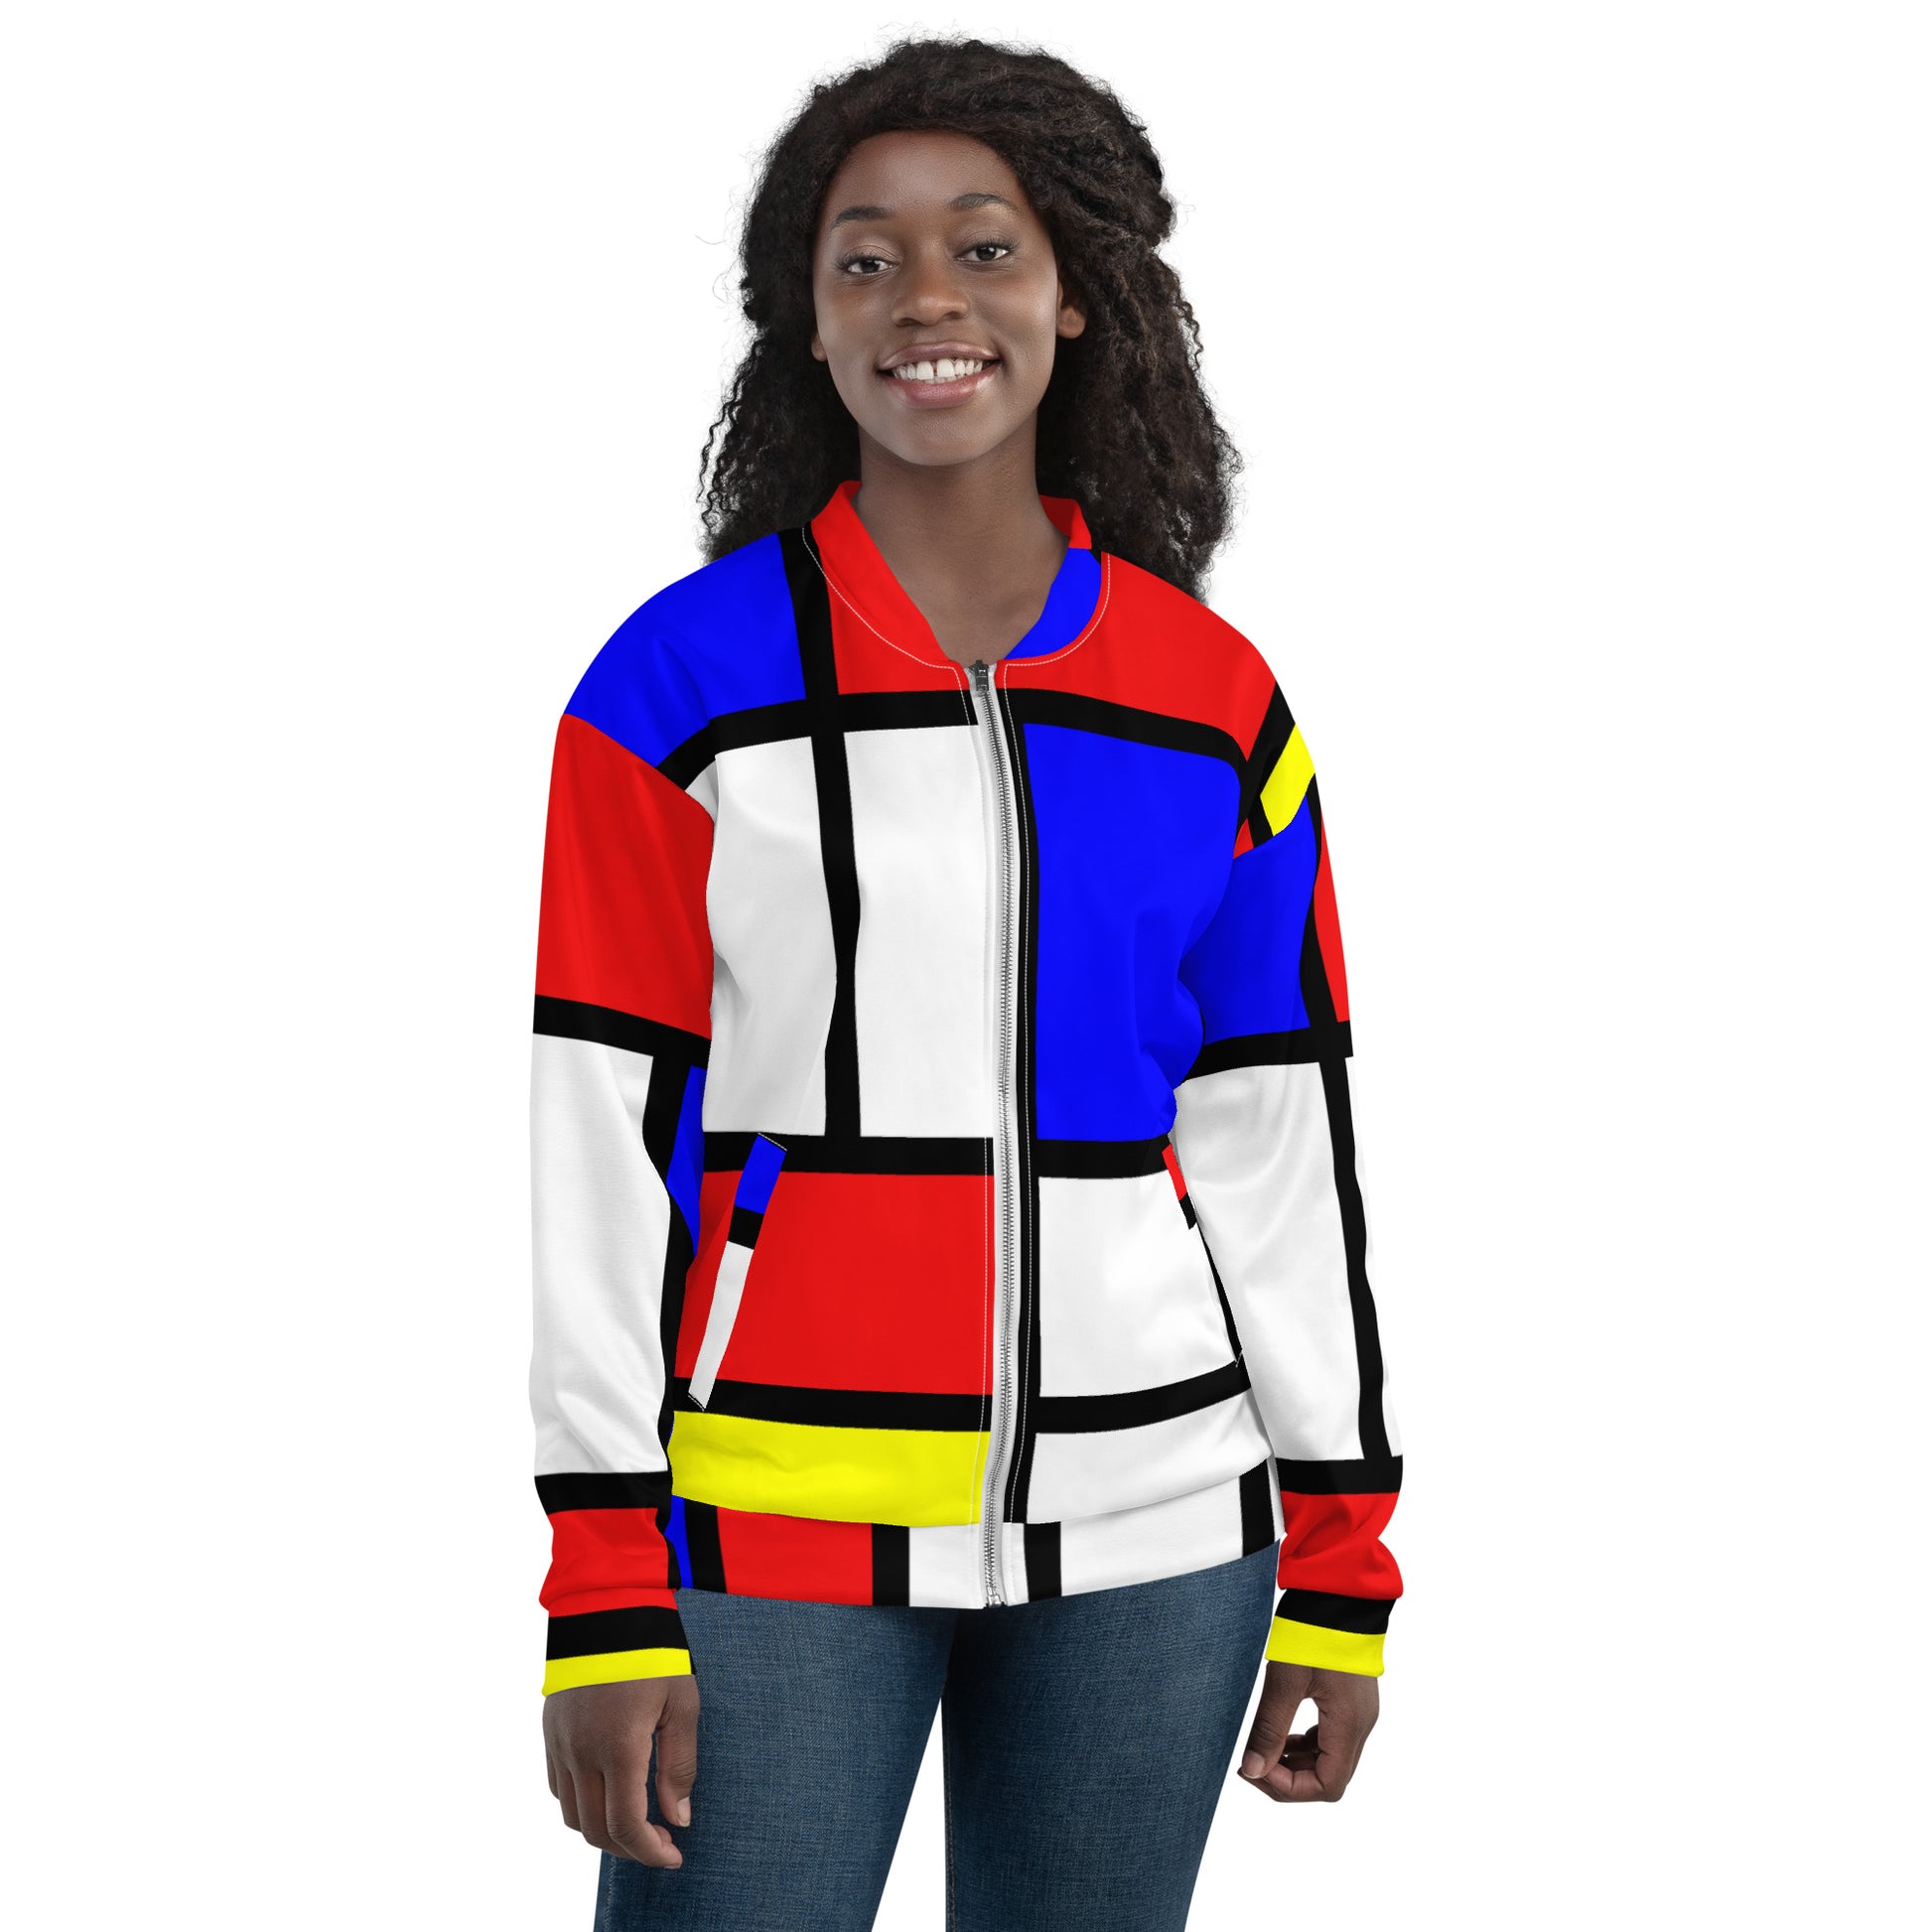 Piet Mondrian jacket